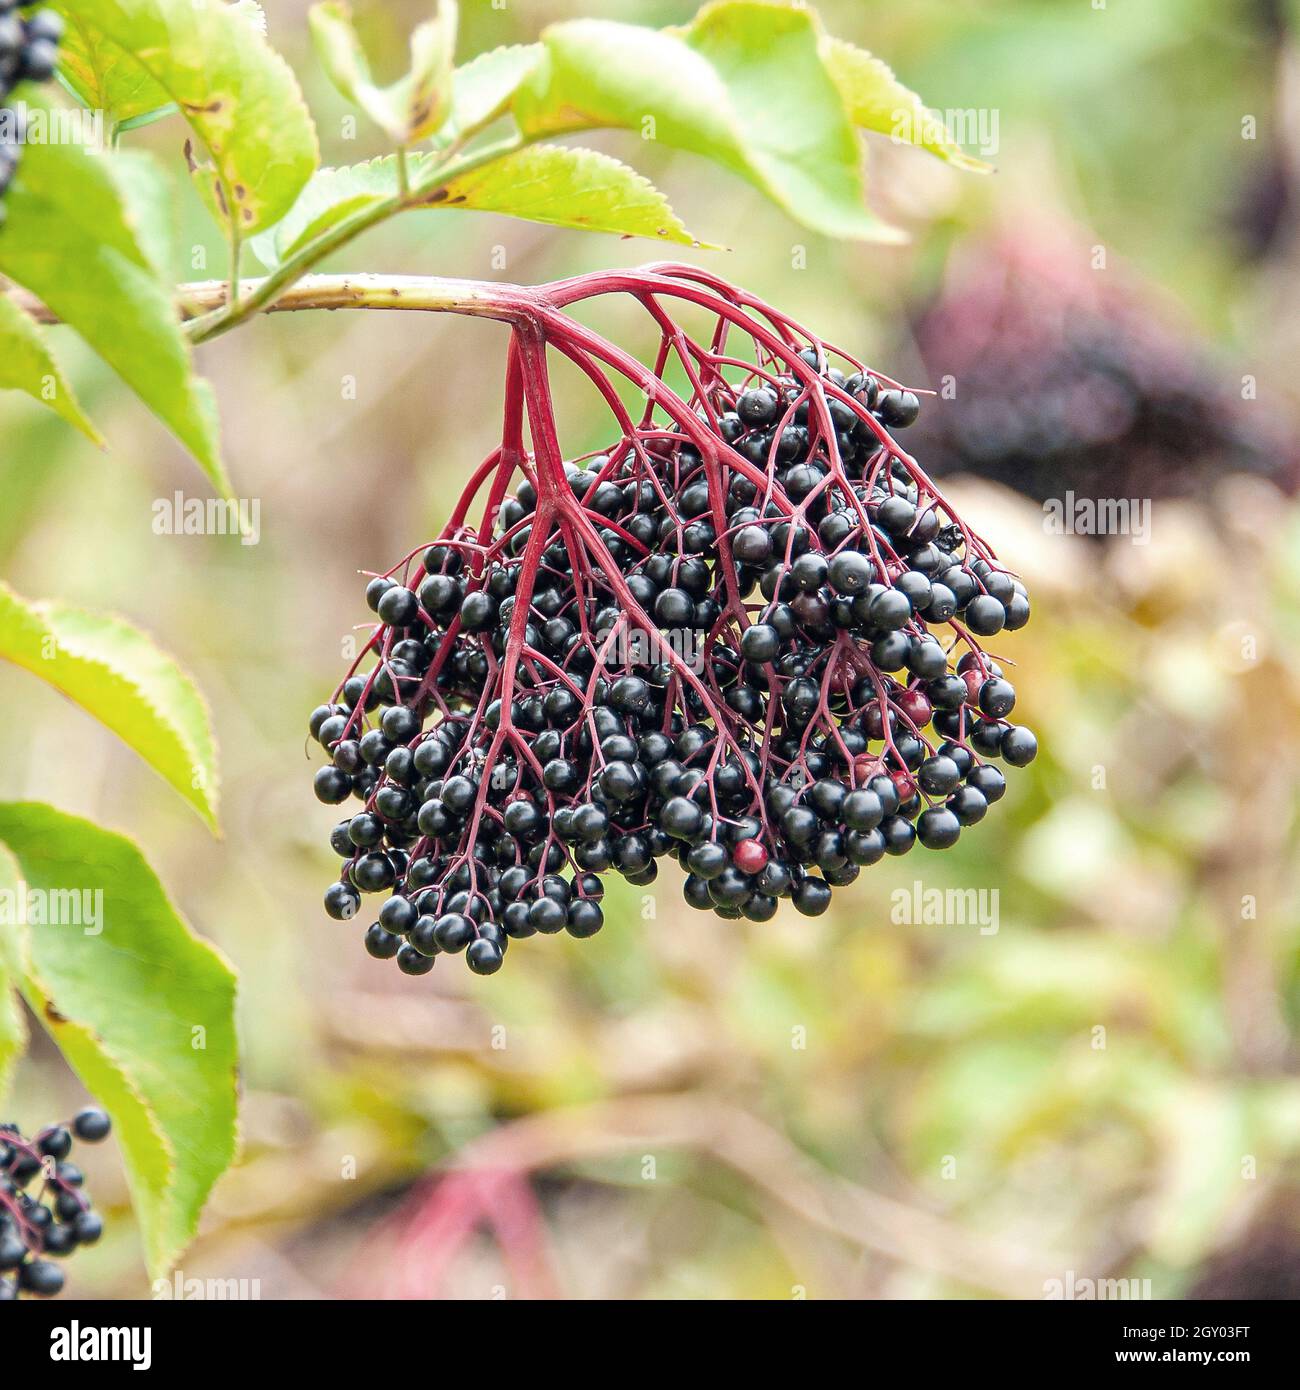 Anciano negro europeo, Elderberry, anciano común (Sambucus nigra 'Haidegg 17', Sambucus nigra Haidegg 17), frutos del cultivar Haidegg 17, Alemania Foto de stock